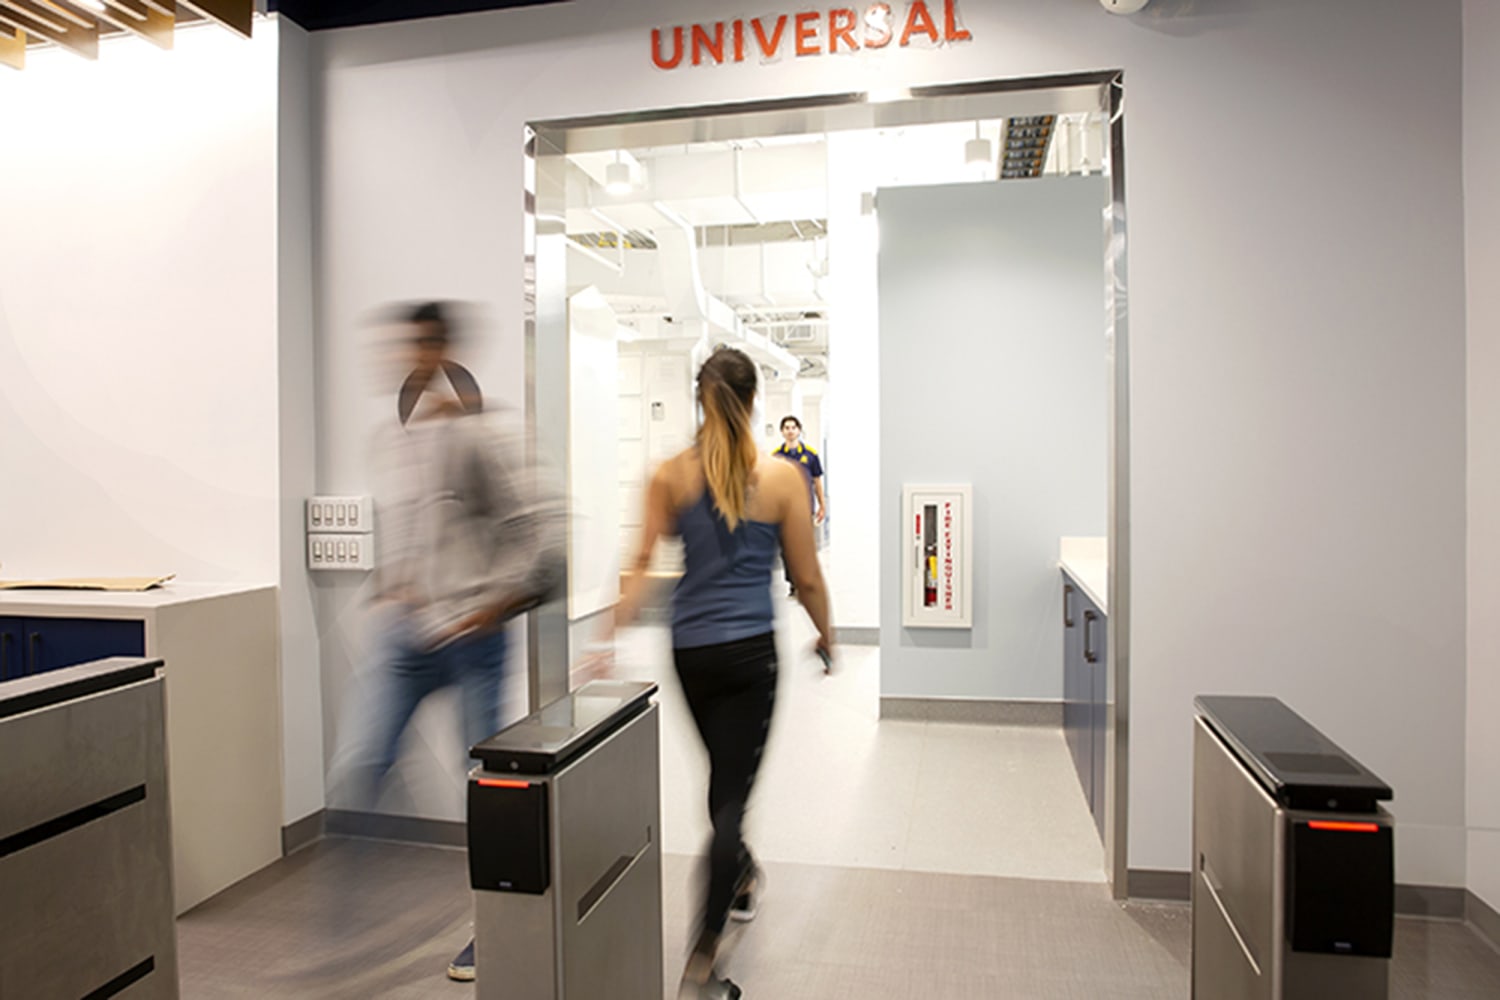 Berkeley Opens Universal Locker Room For Trans Students